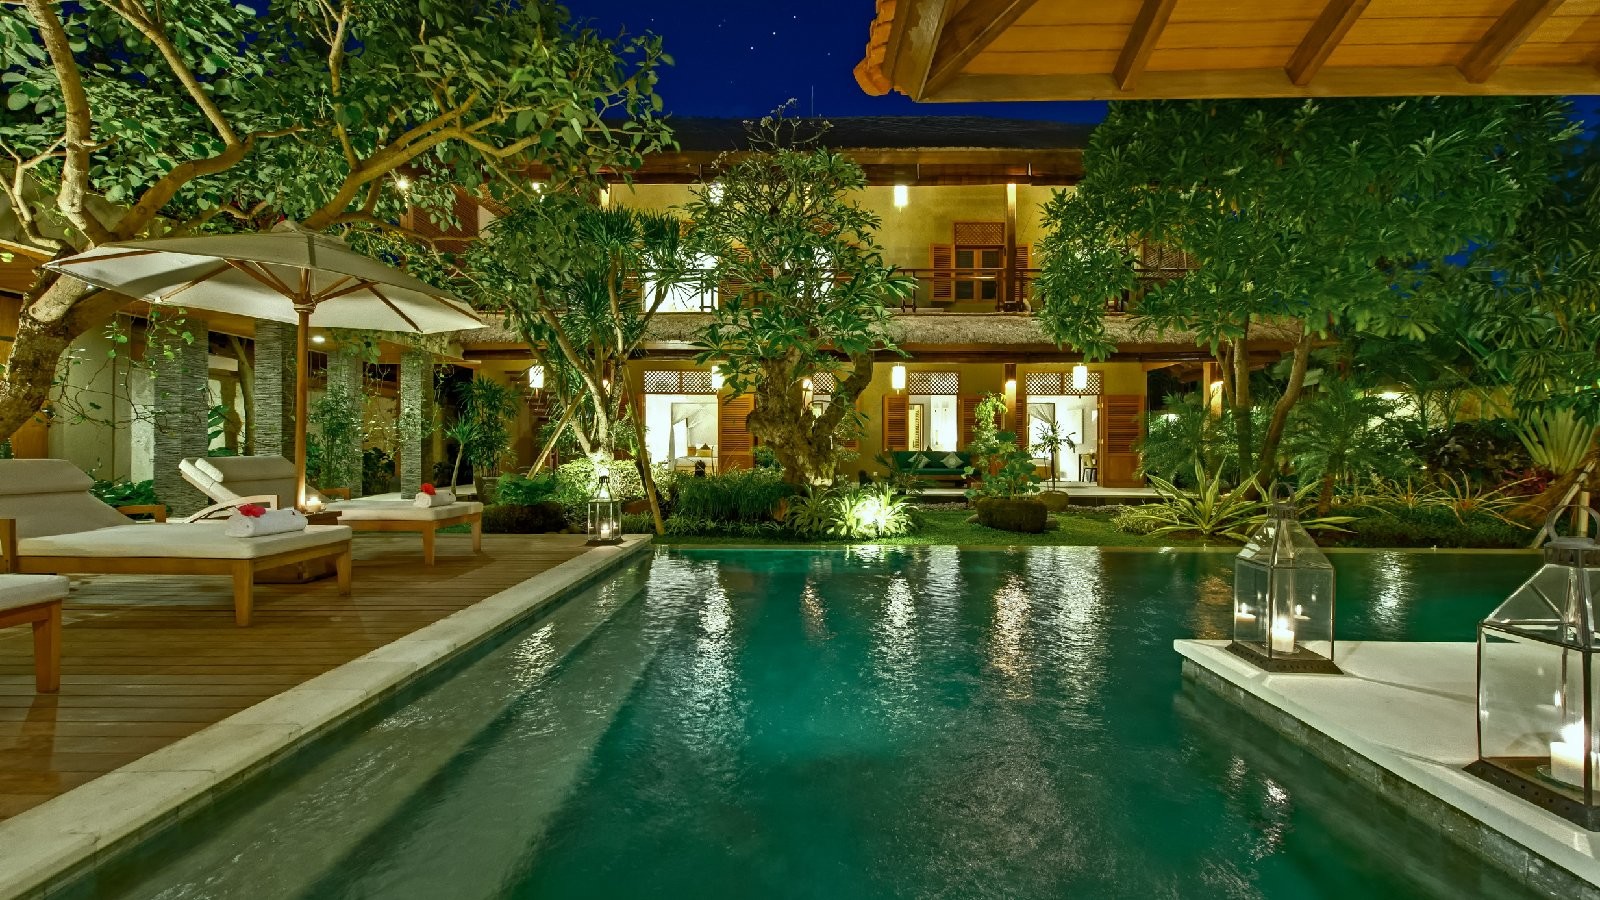  Villa  Kinaree  Seminyak Bali  4 chambres Meilleur 